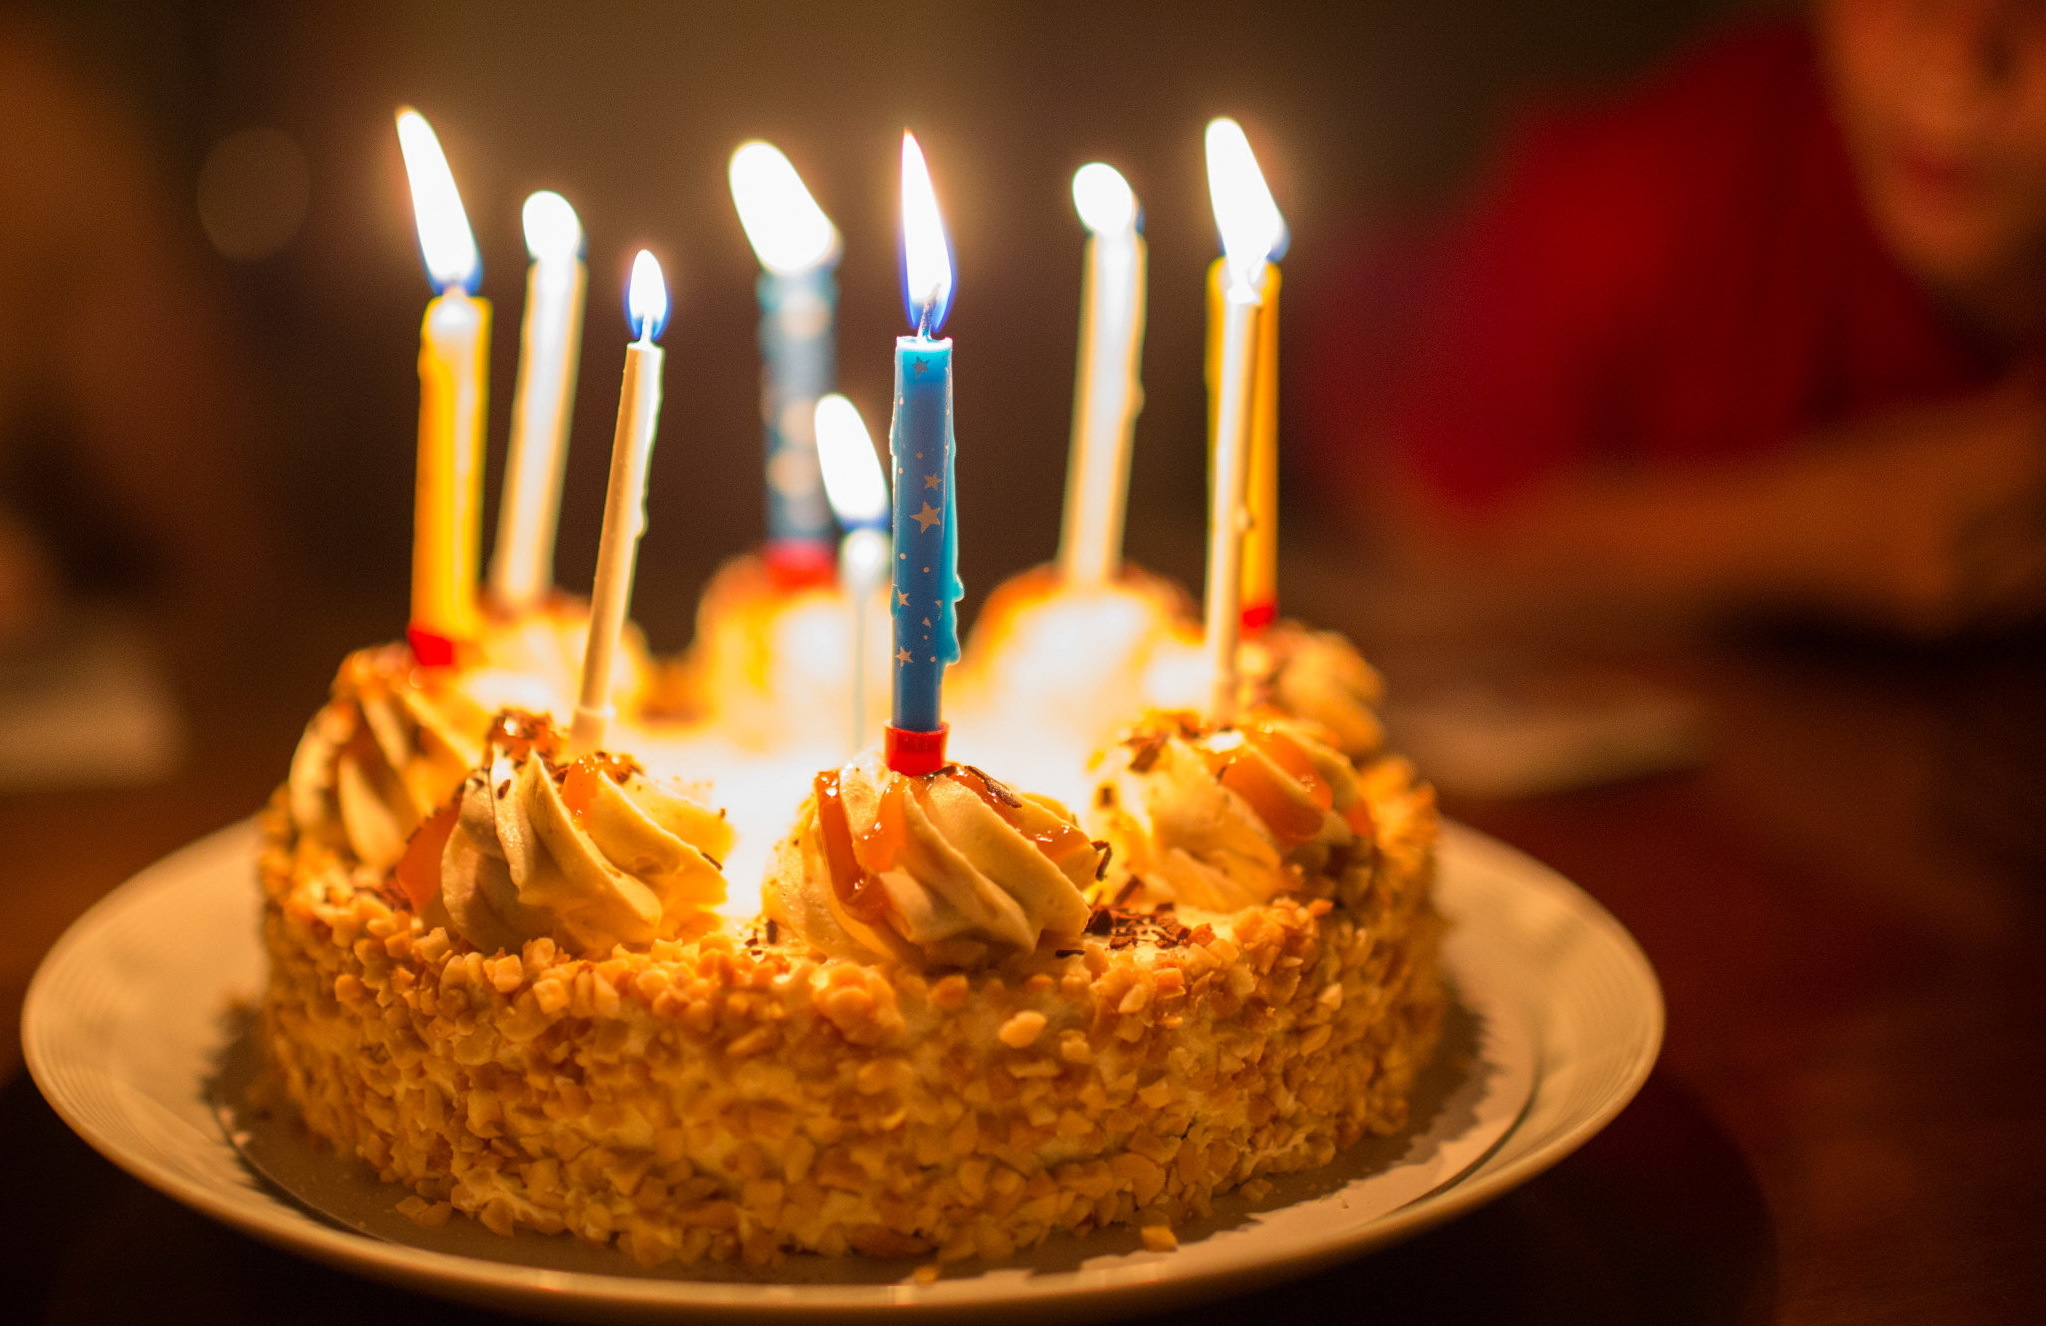 Cake candle. Свечи для торта. Тортик со свечами. Торт со свечками. Красивый торт со свечами.